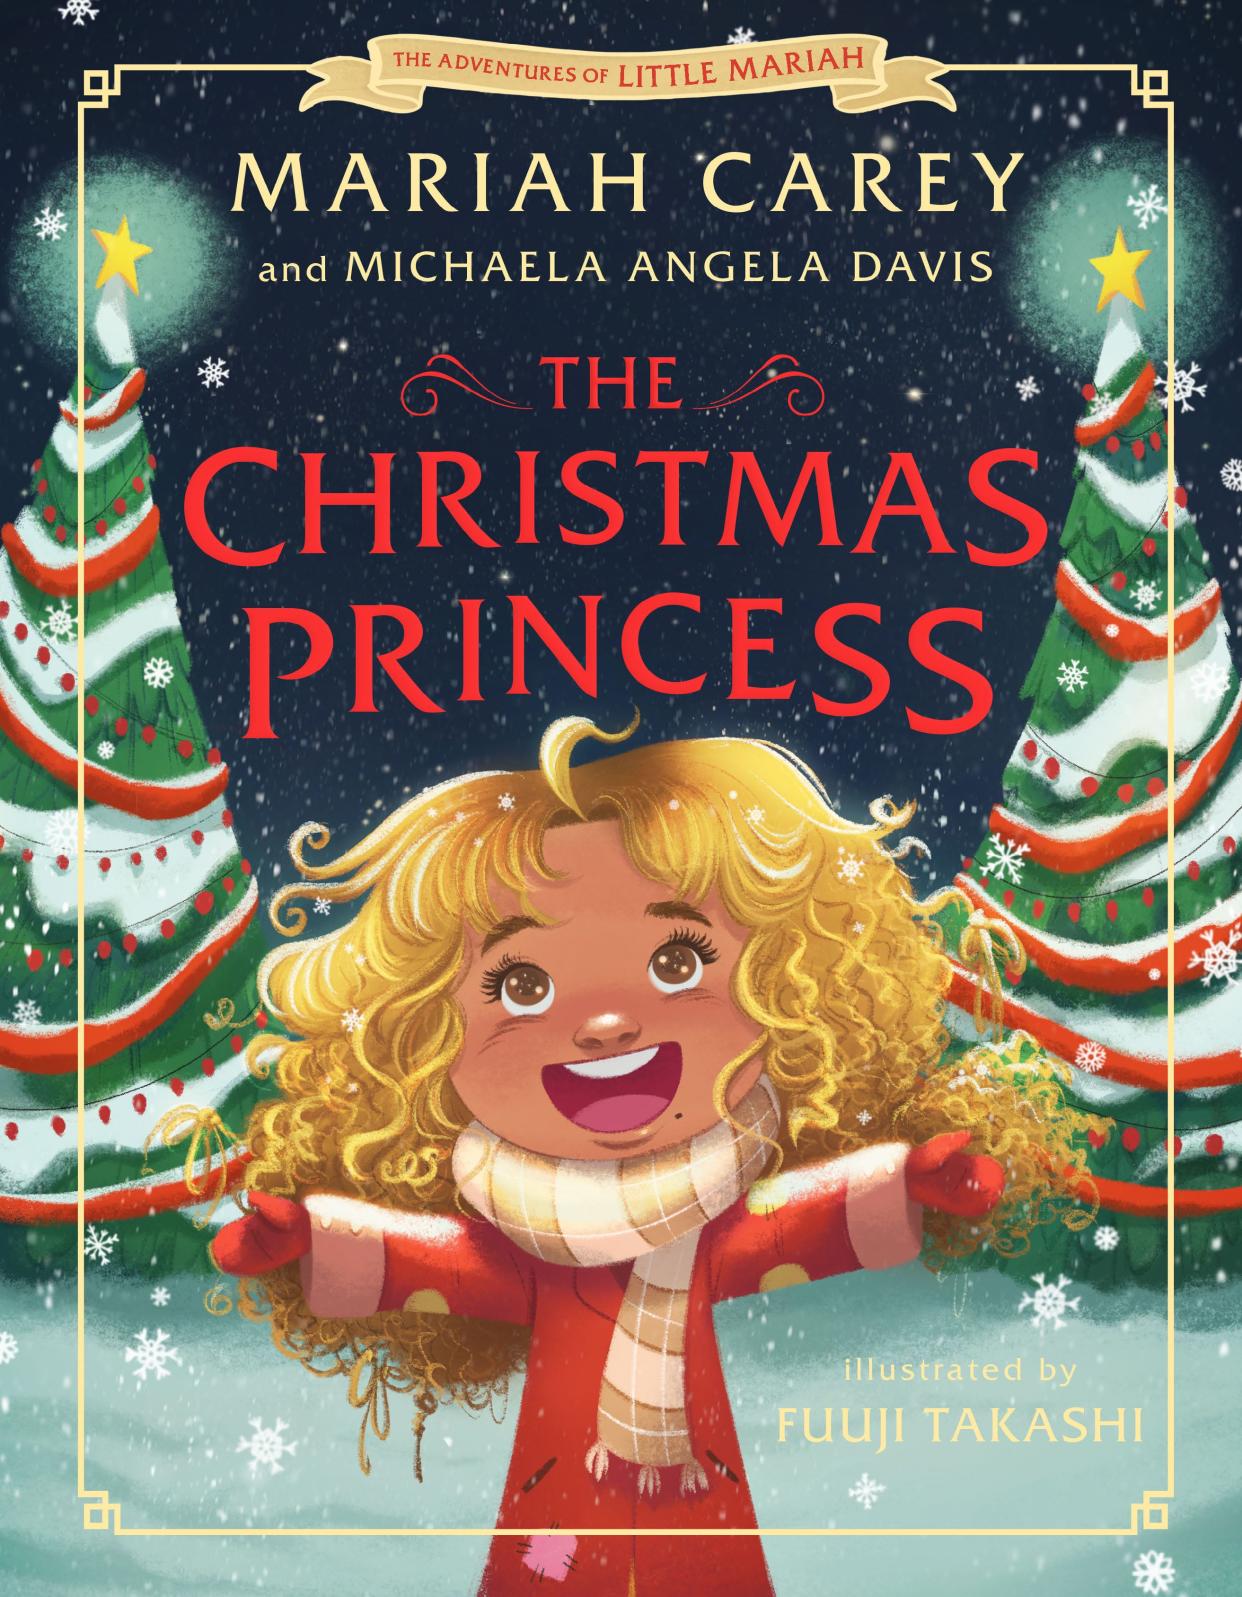 "The Christmas Princess" by Mariah Carey and Michaela Angela Davis